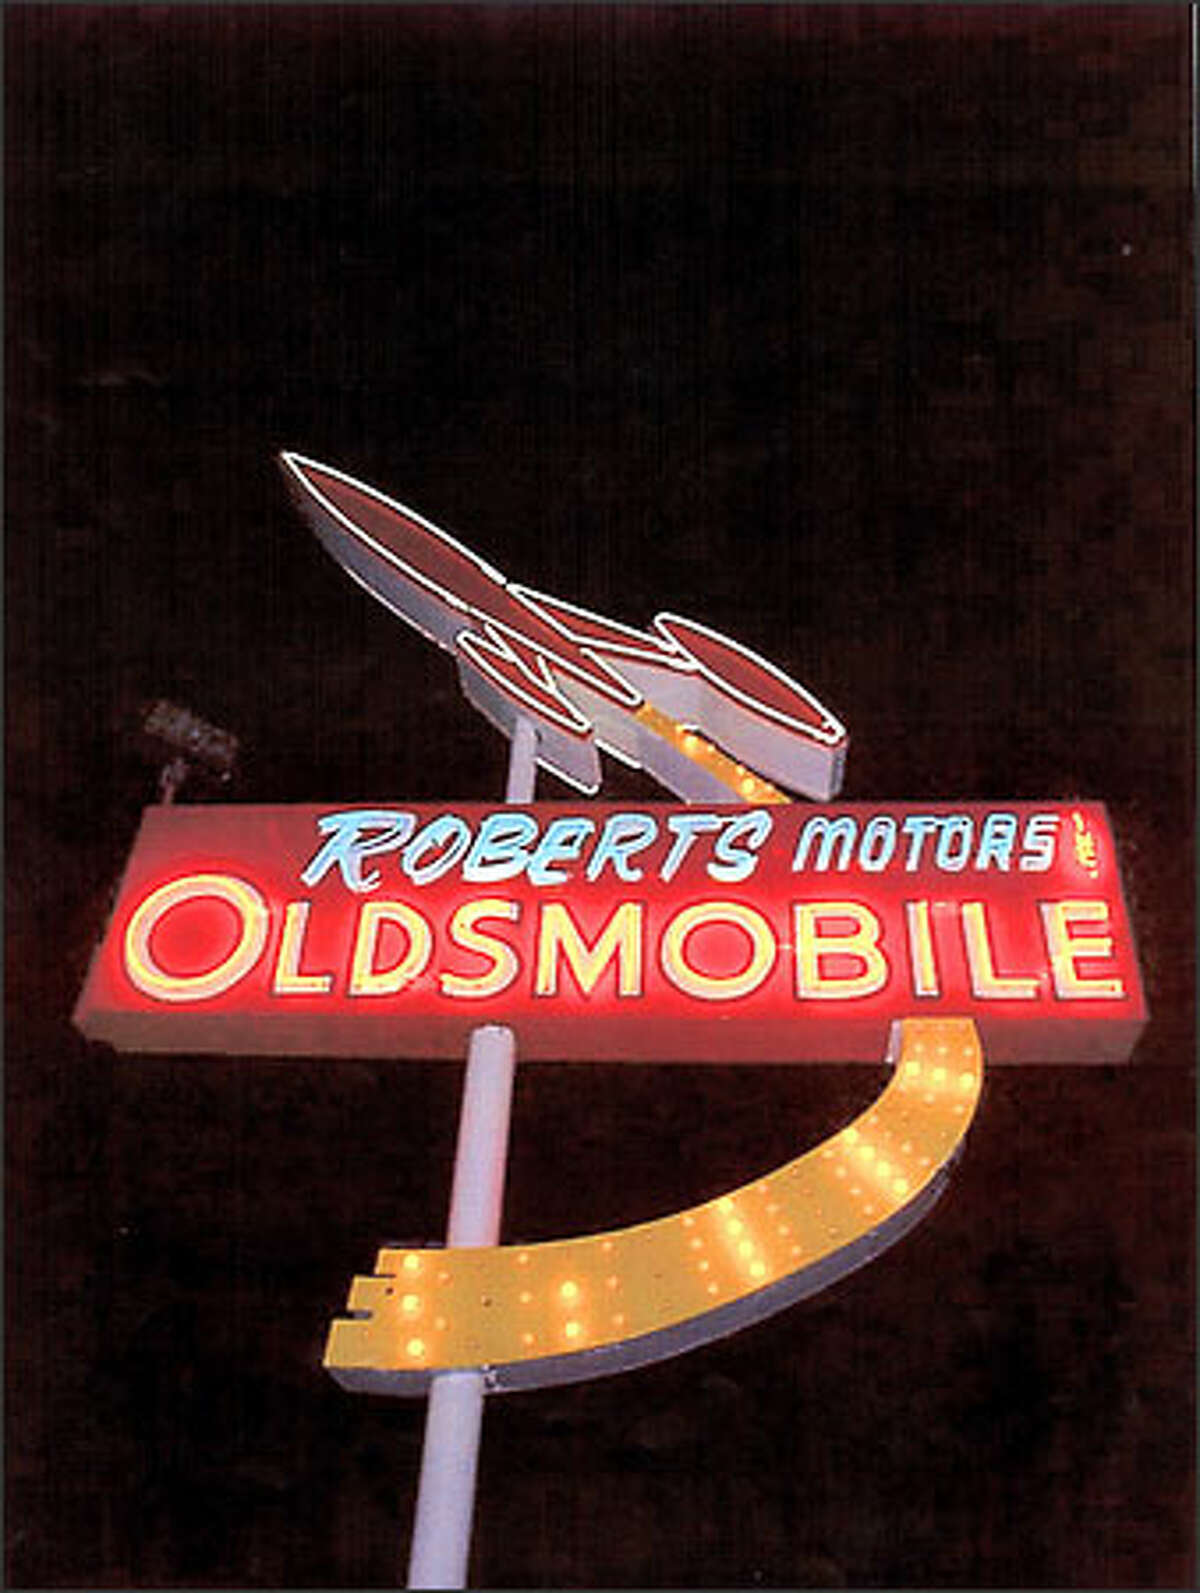 The Roberts Oldsmobile sign in Auburn.